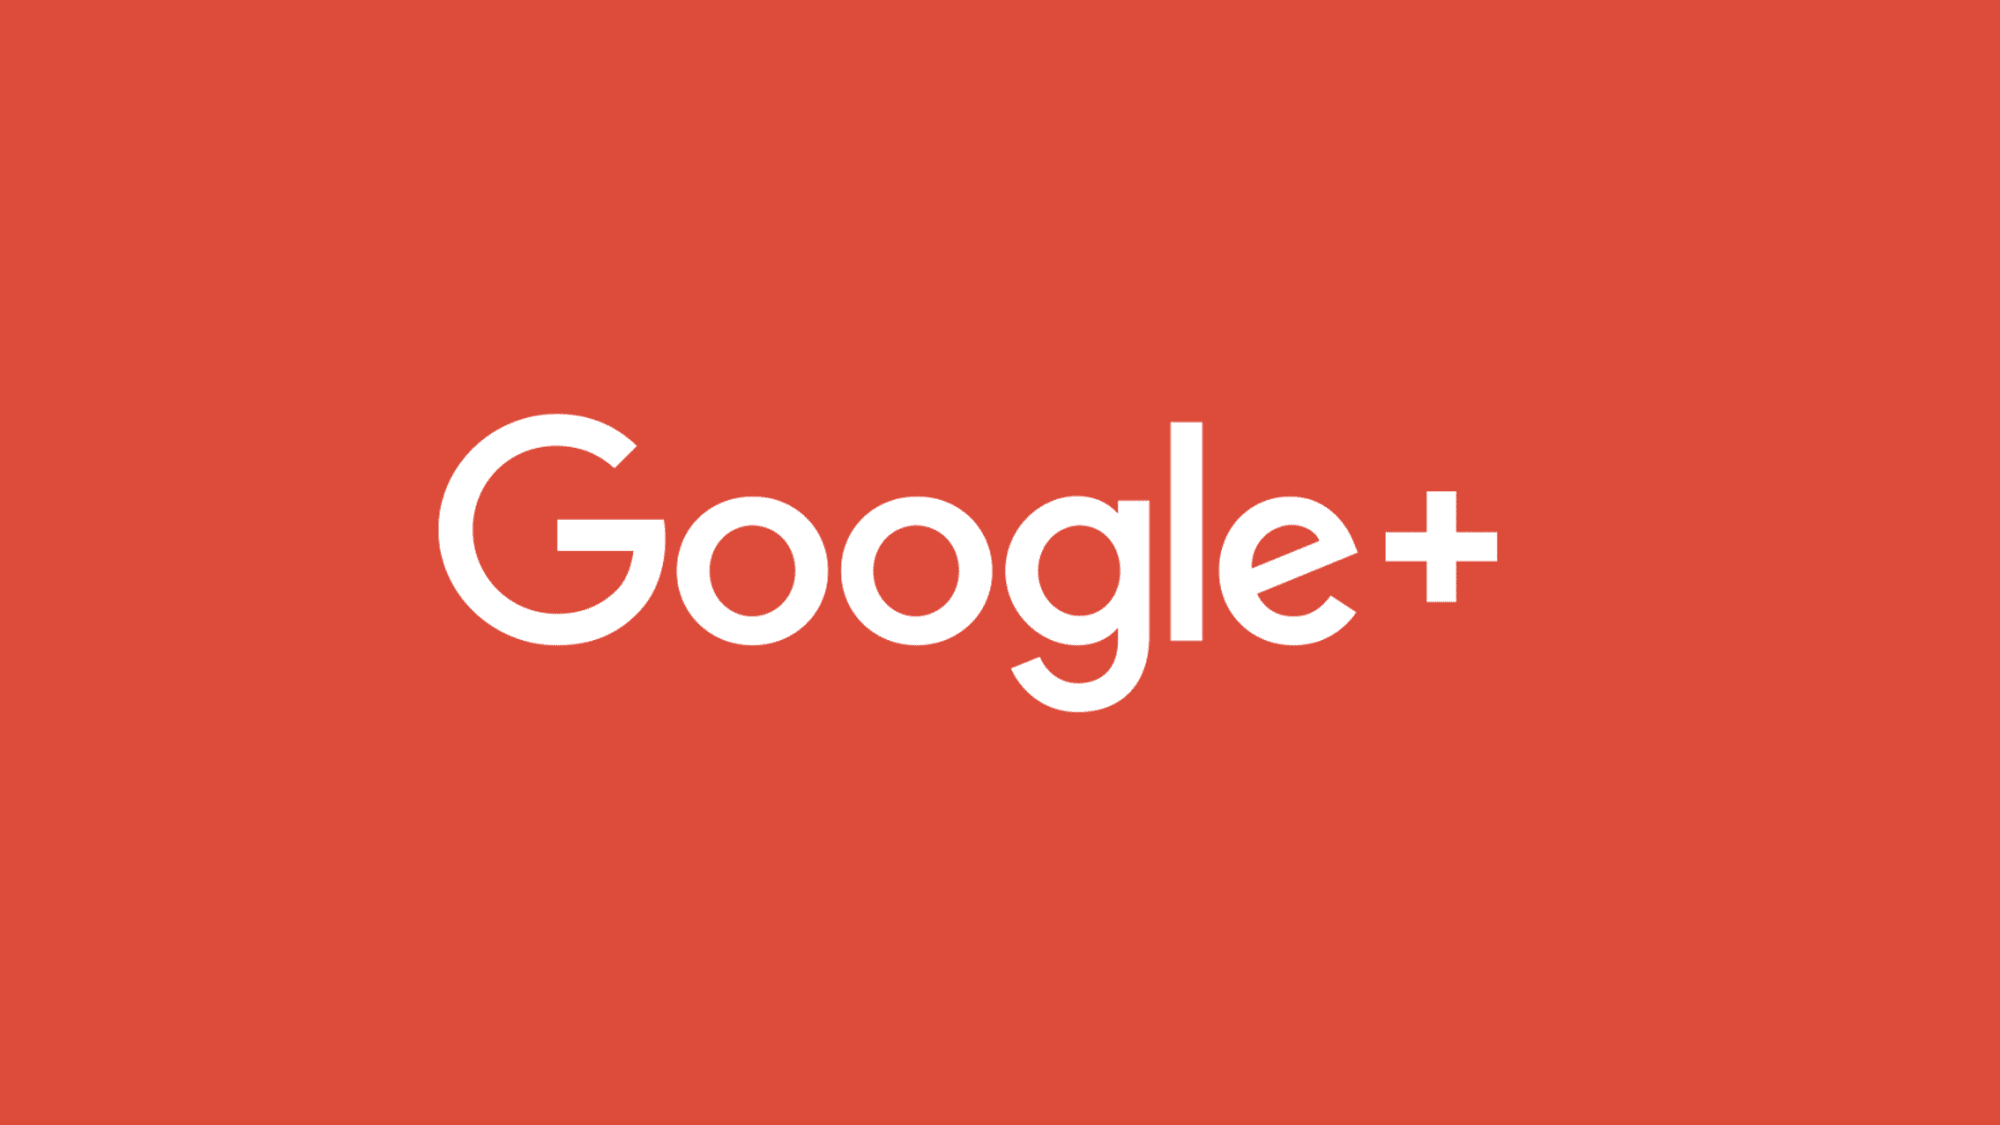 Google+ Shutdown: Google Officaly Kills Their Failed Social Network